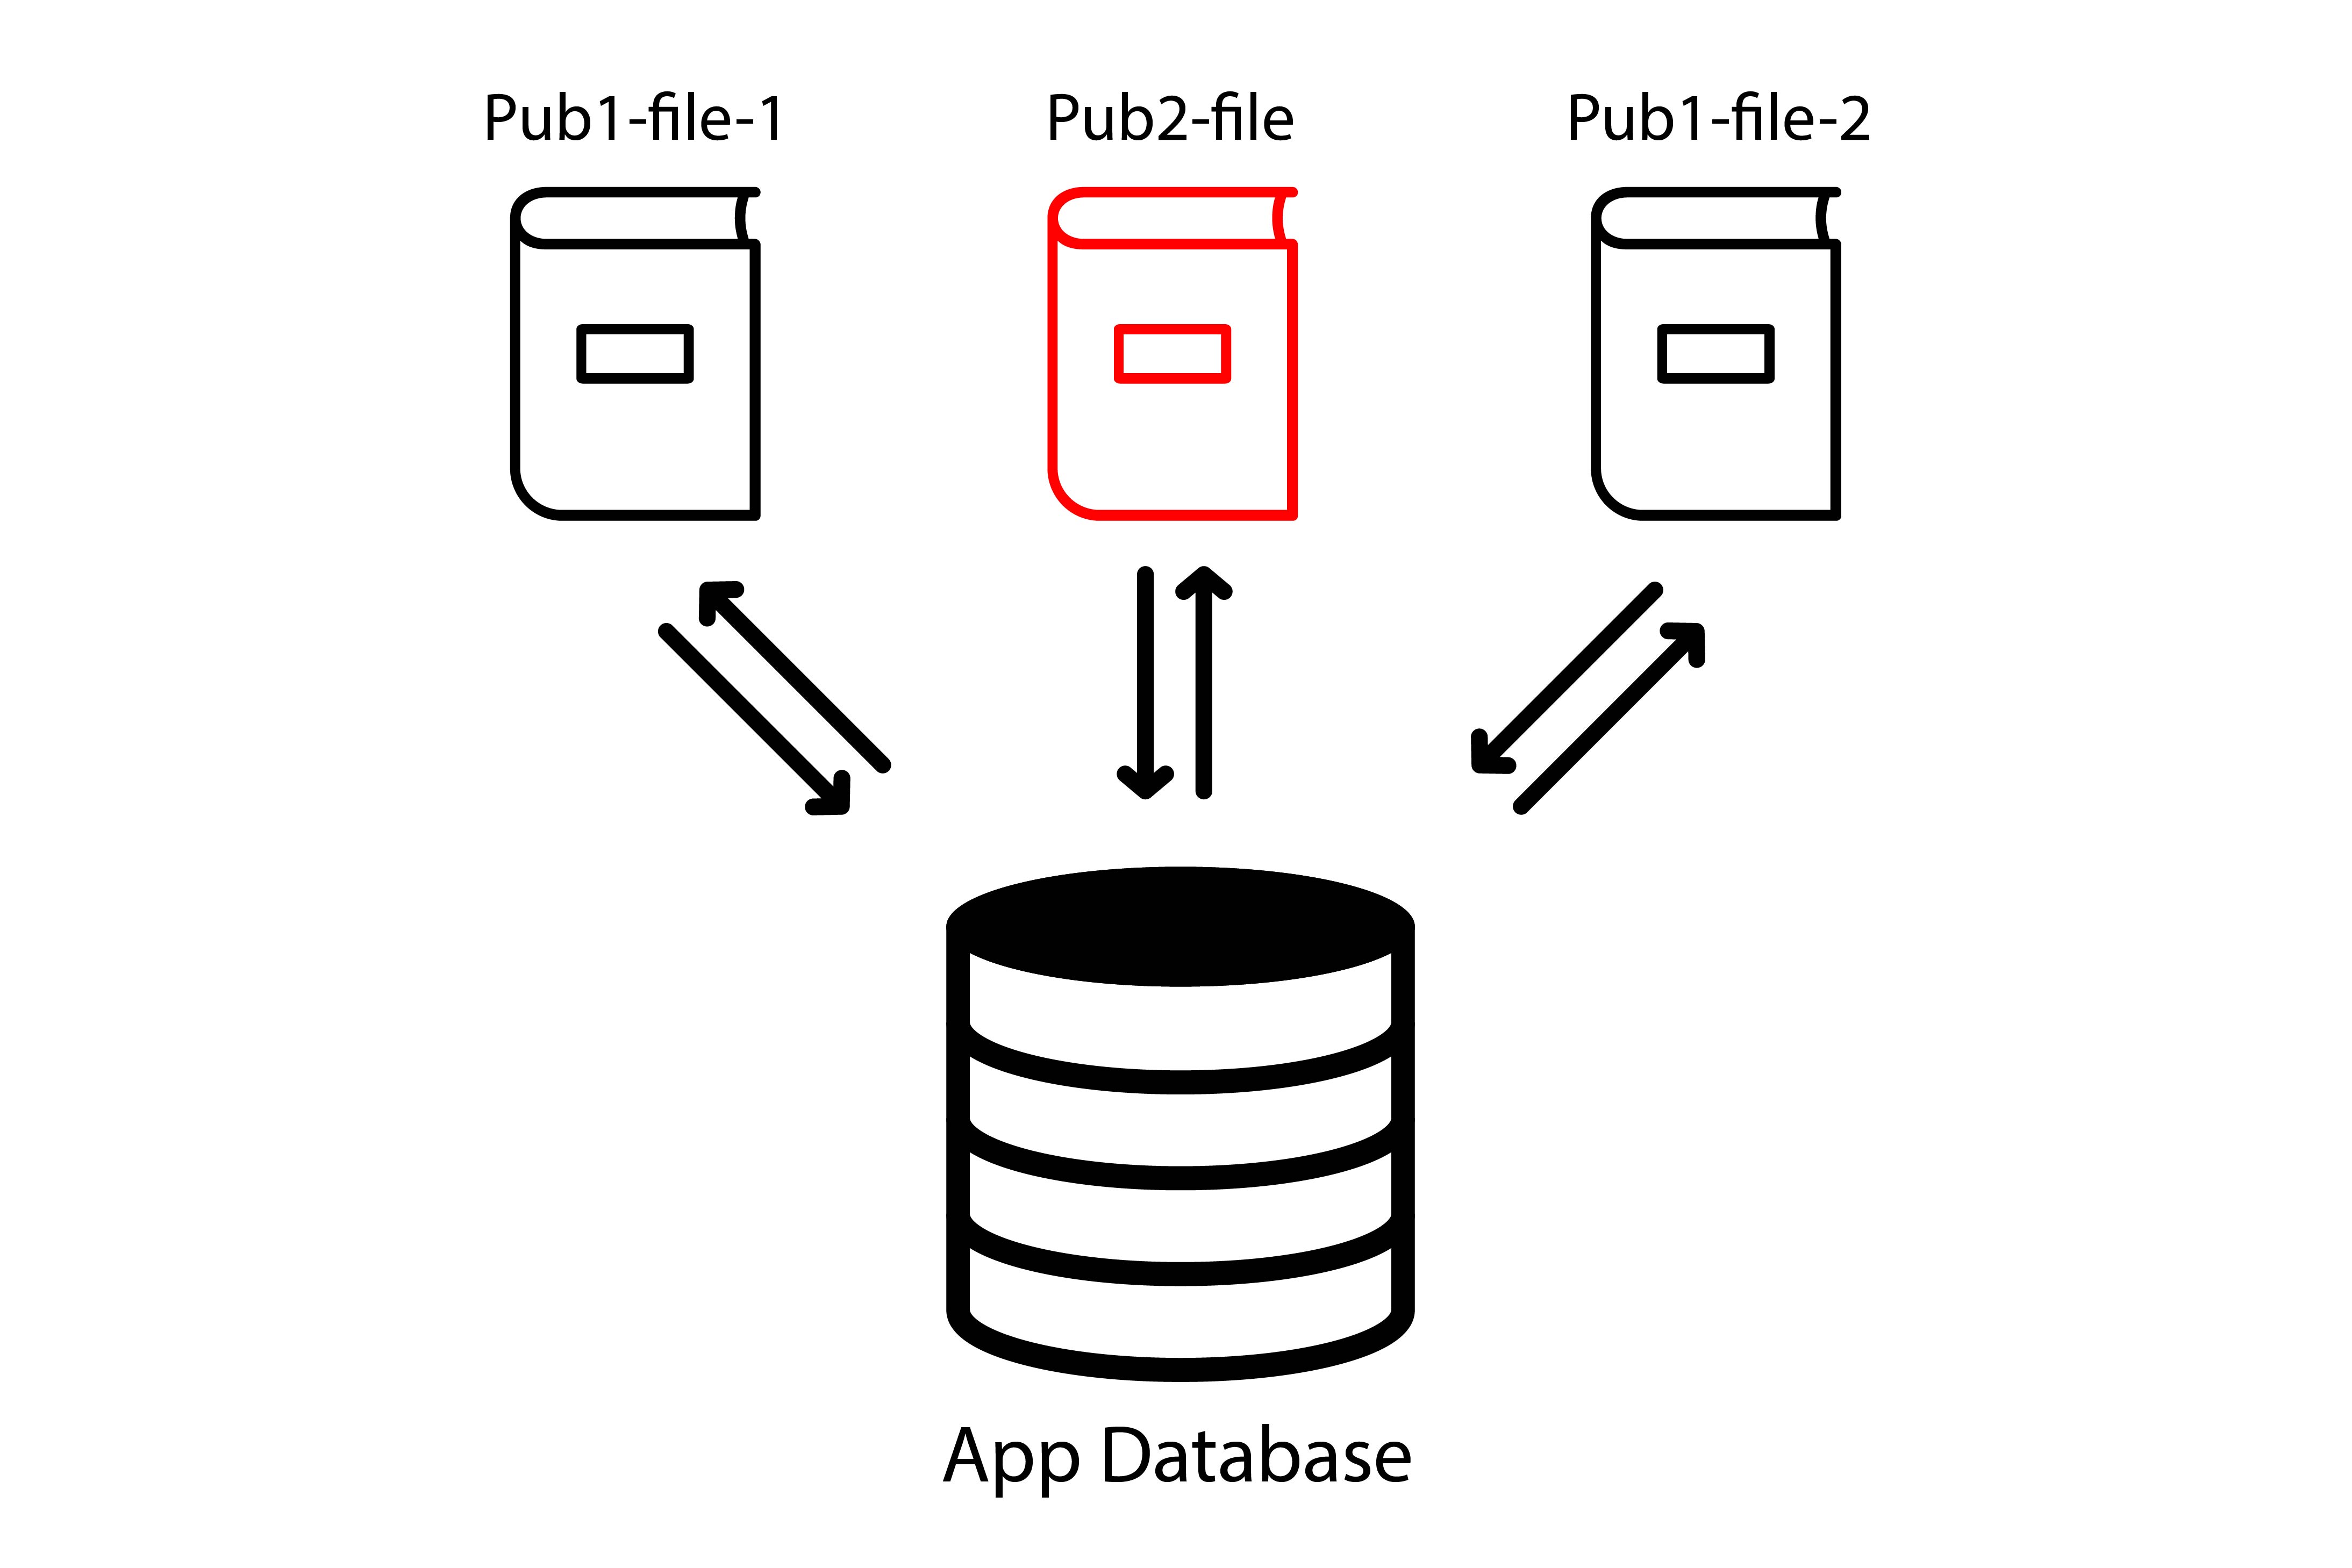 Three ebooks using the same database